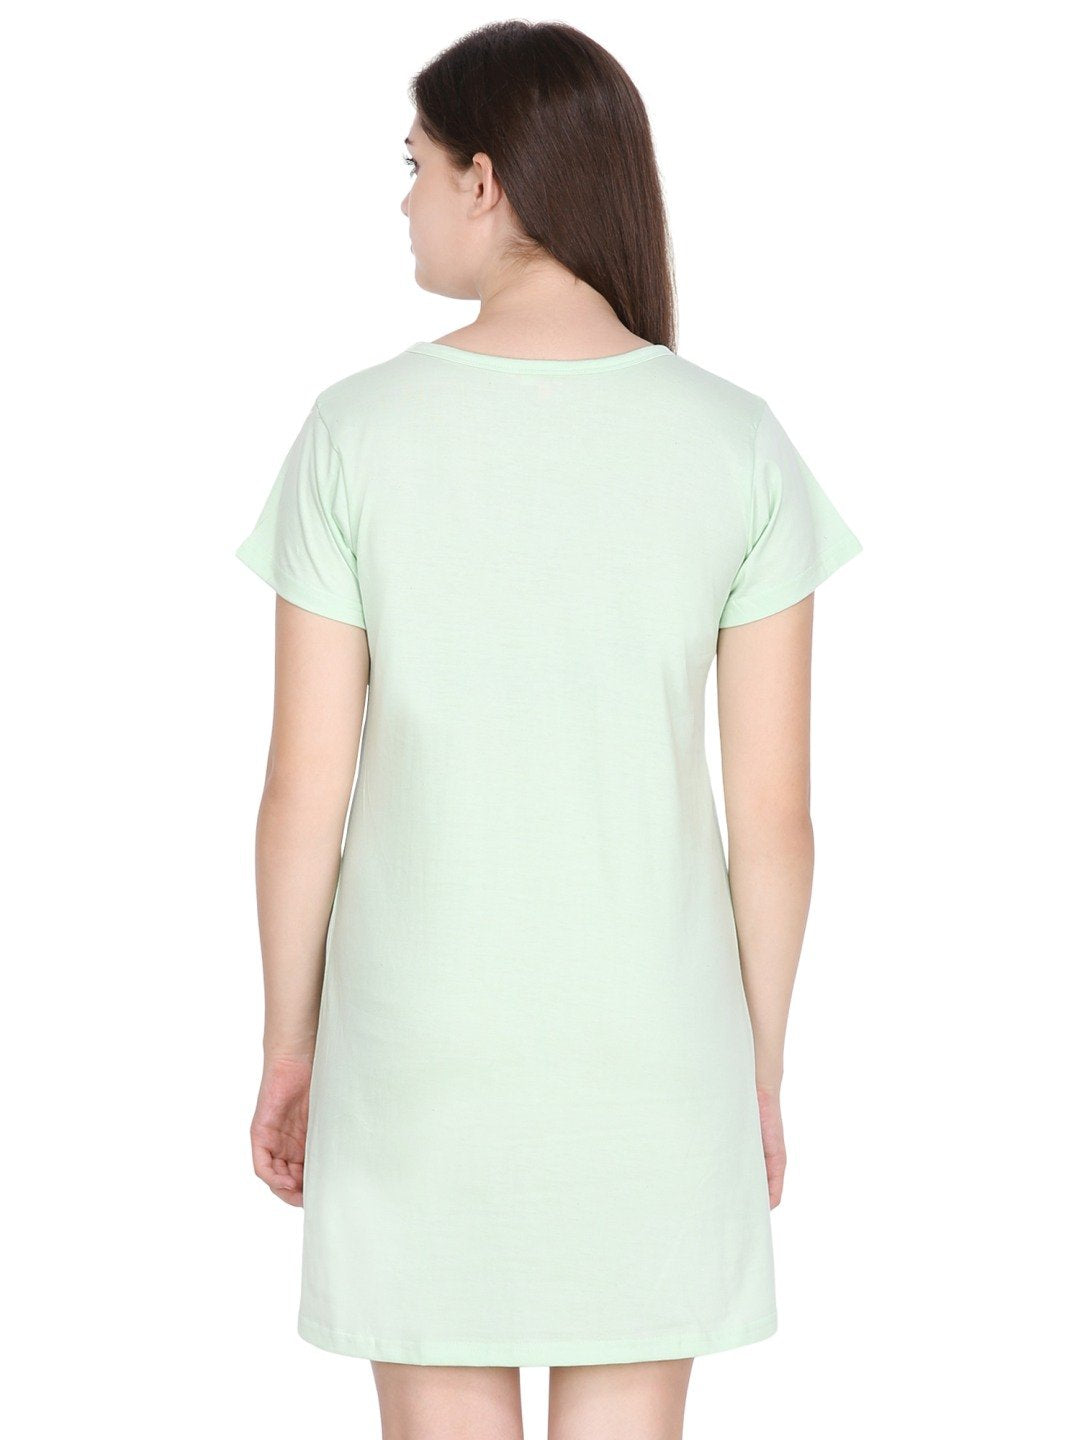 Klamotten Women's Cotton Sleepshirt DB18Gs8